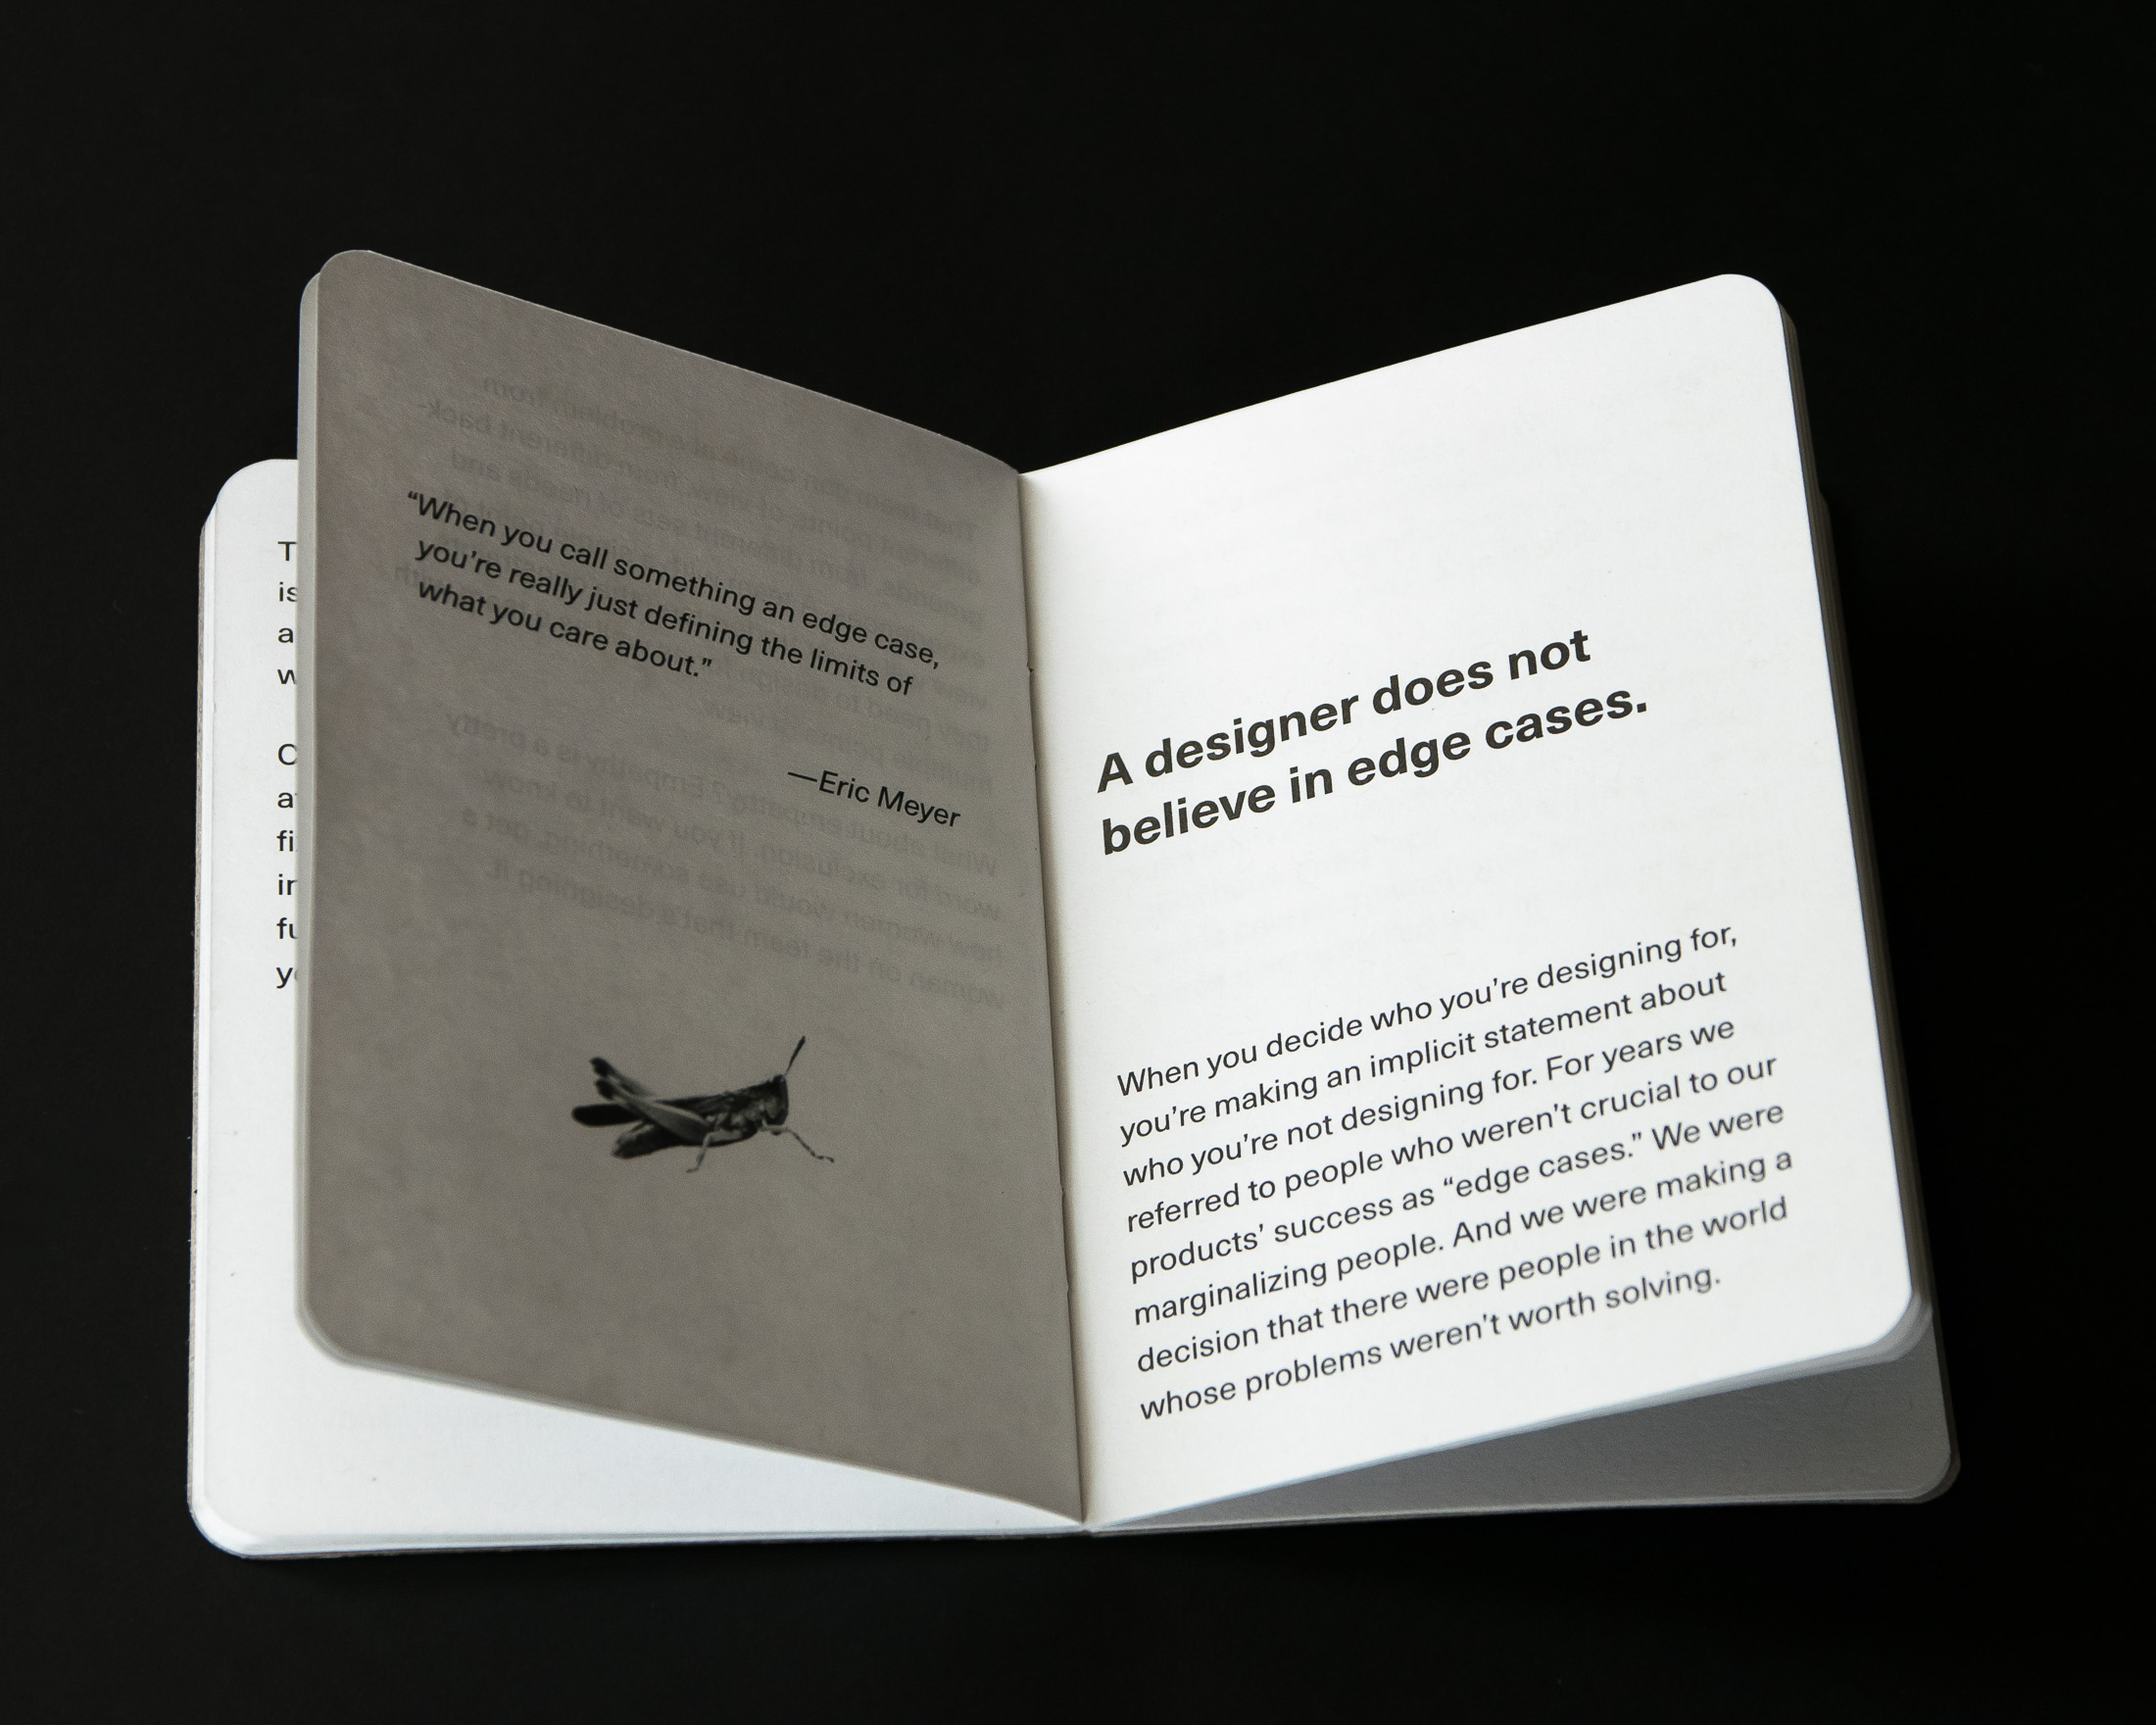 Design Ethics - Mike Monteiro - Scout Books